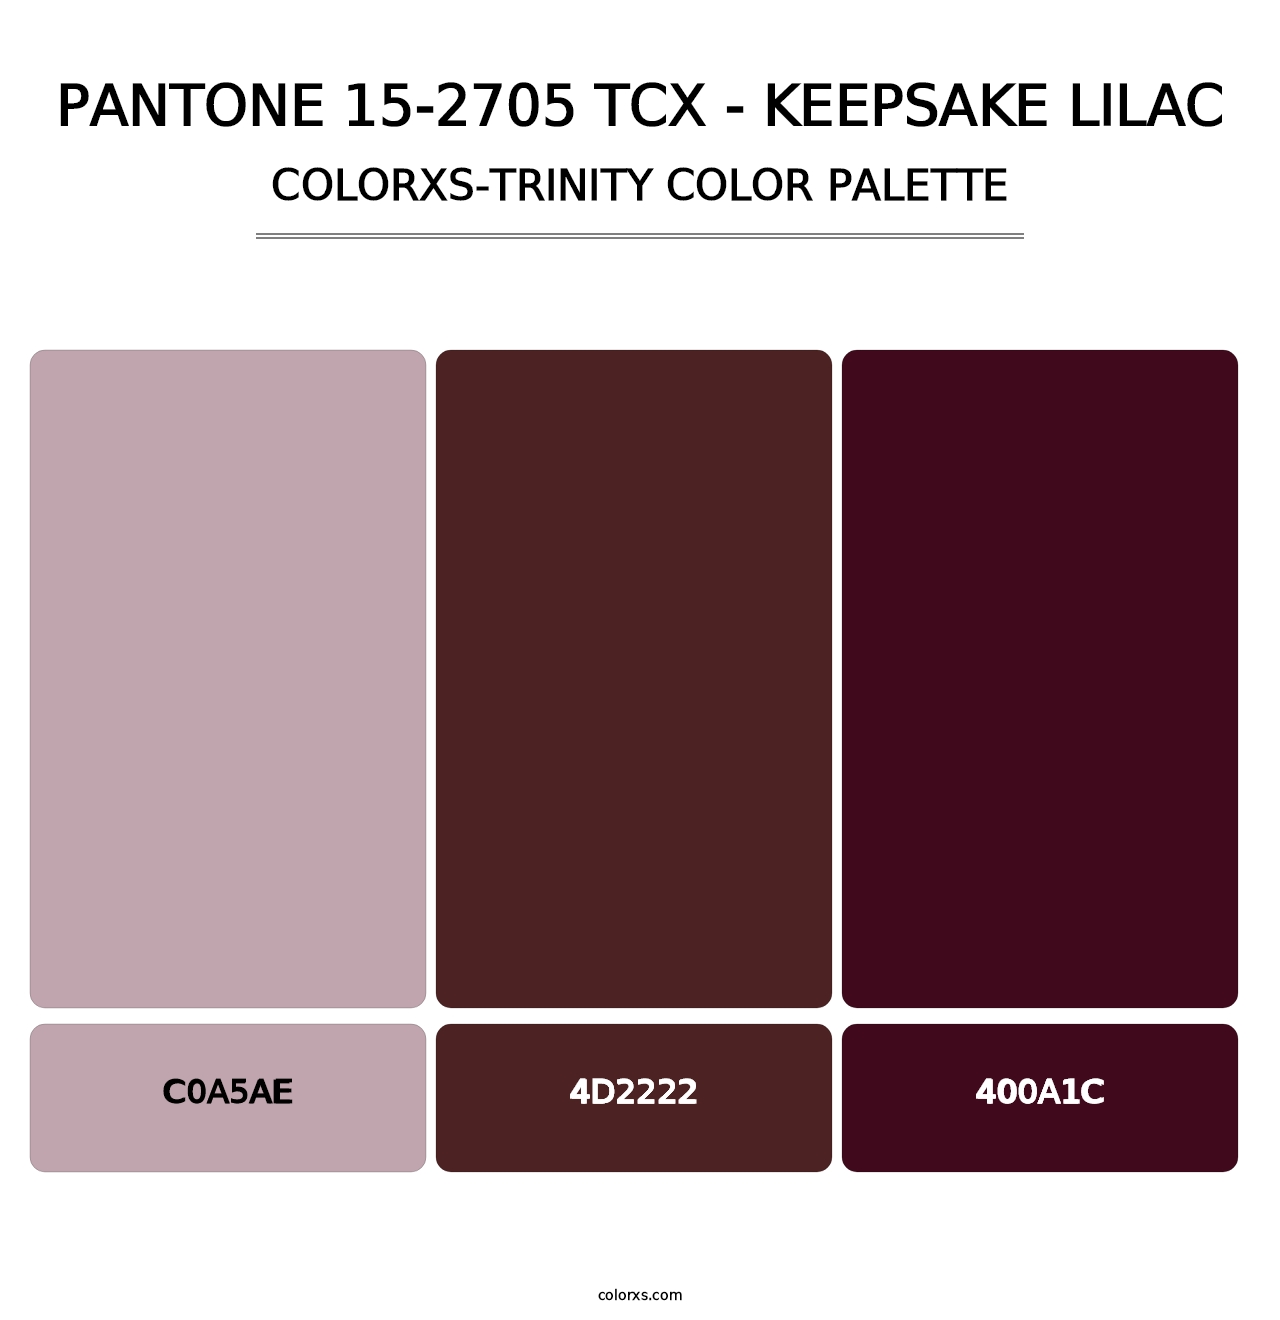 PANTONE 15-2705 TCX - Keepsake Lilac - Colorxs Trinity Palette